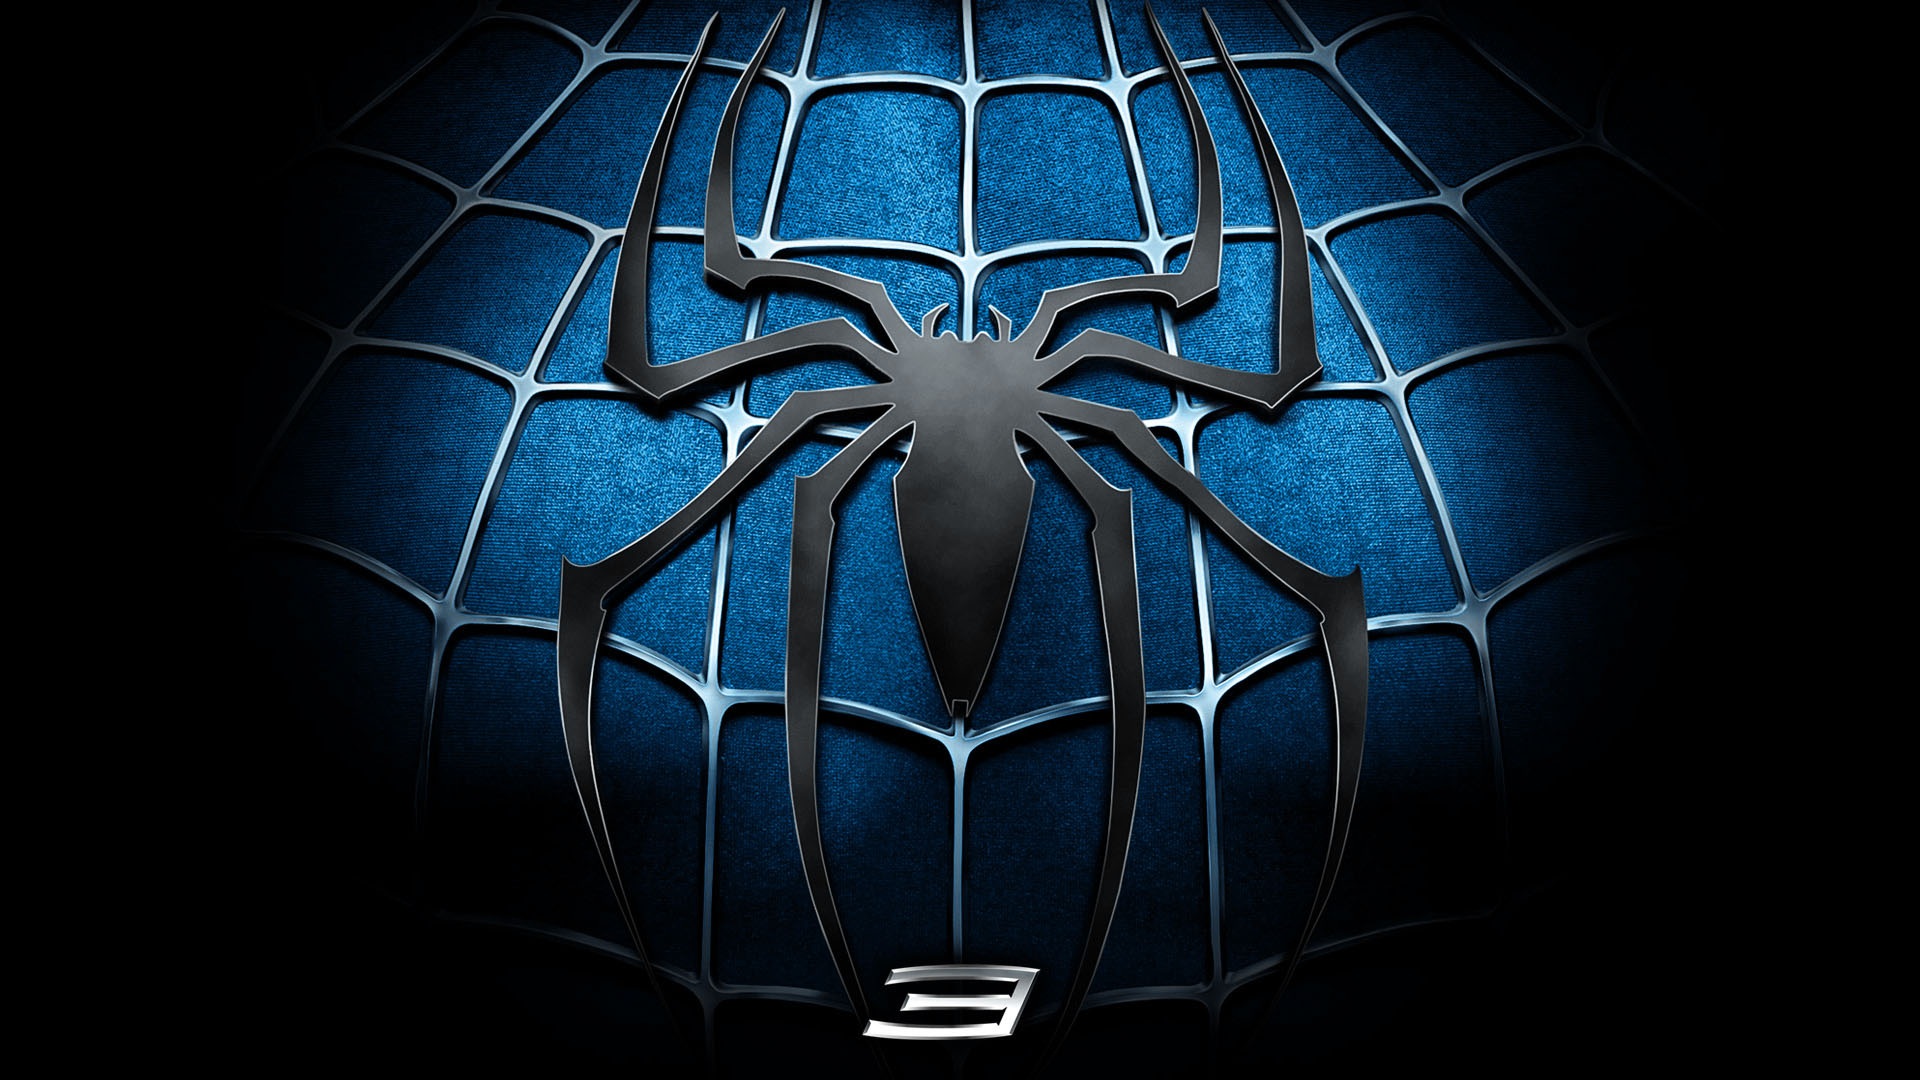 Black Spiderman Wallpaper High Quality Resolution - Kemecer.com